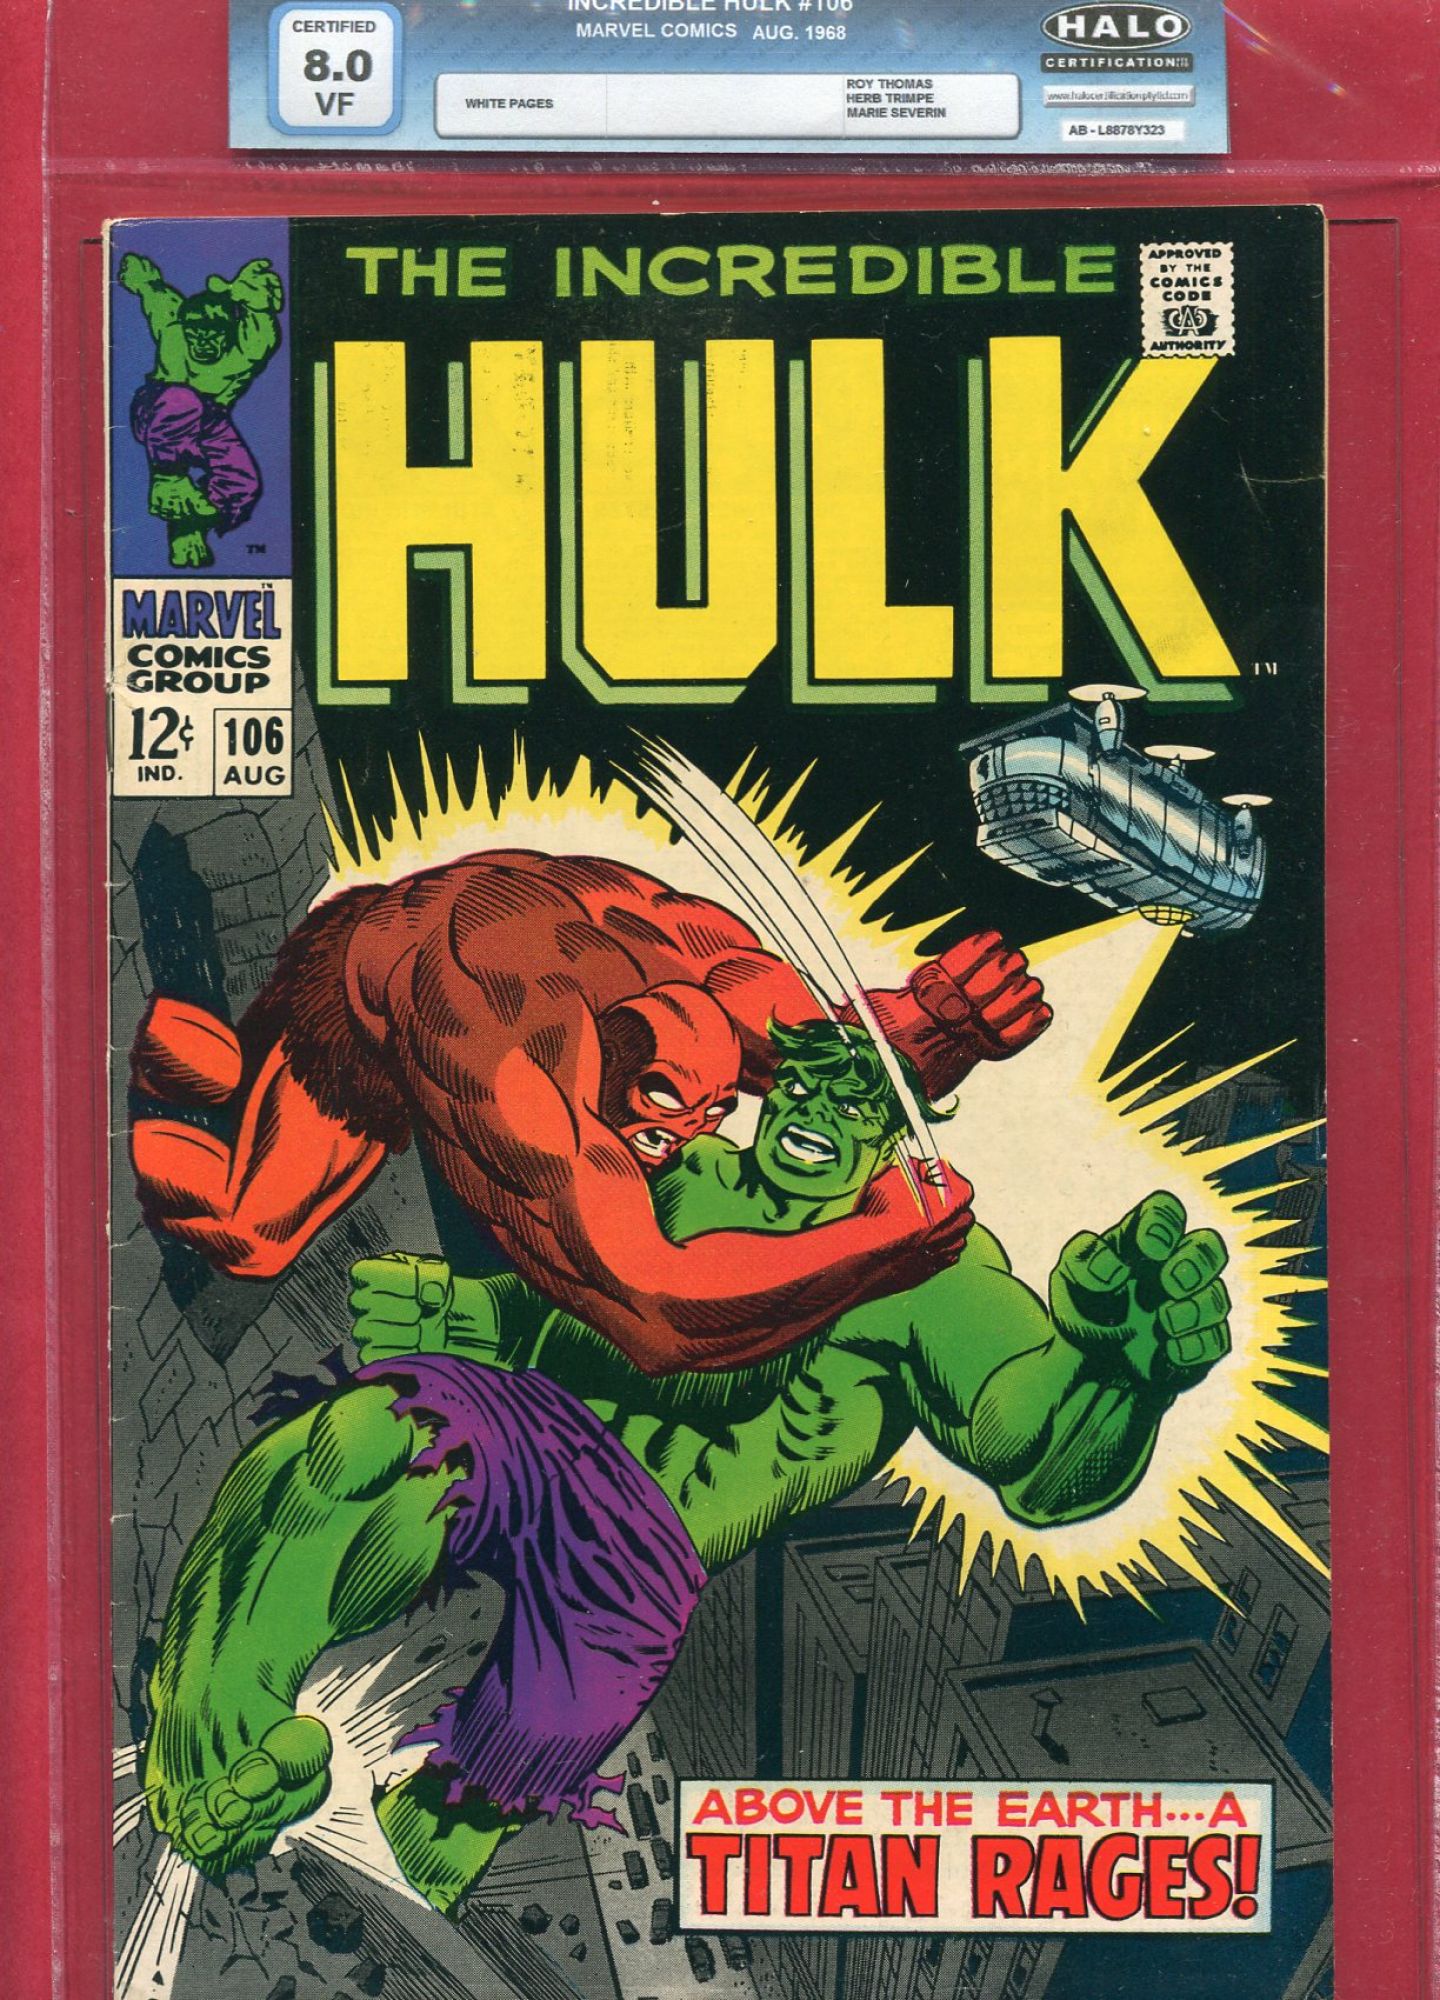 Incredible Hulk #106, Aug 1968, 8.0 VF Halo Soft Slab